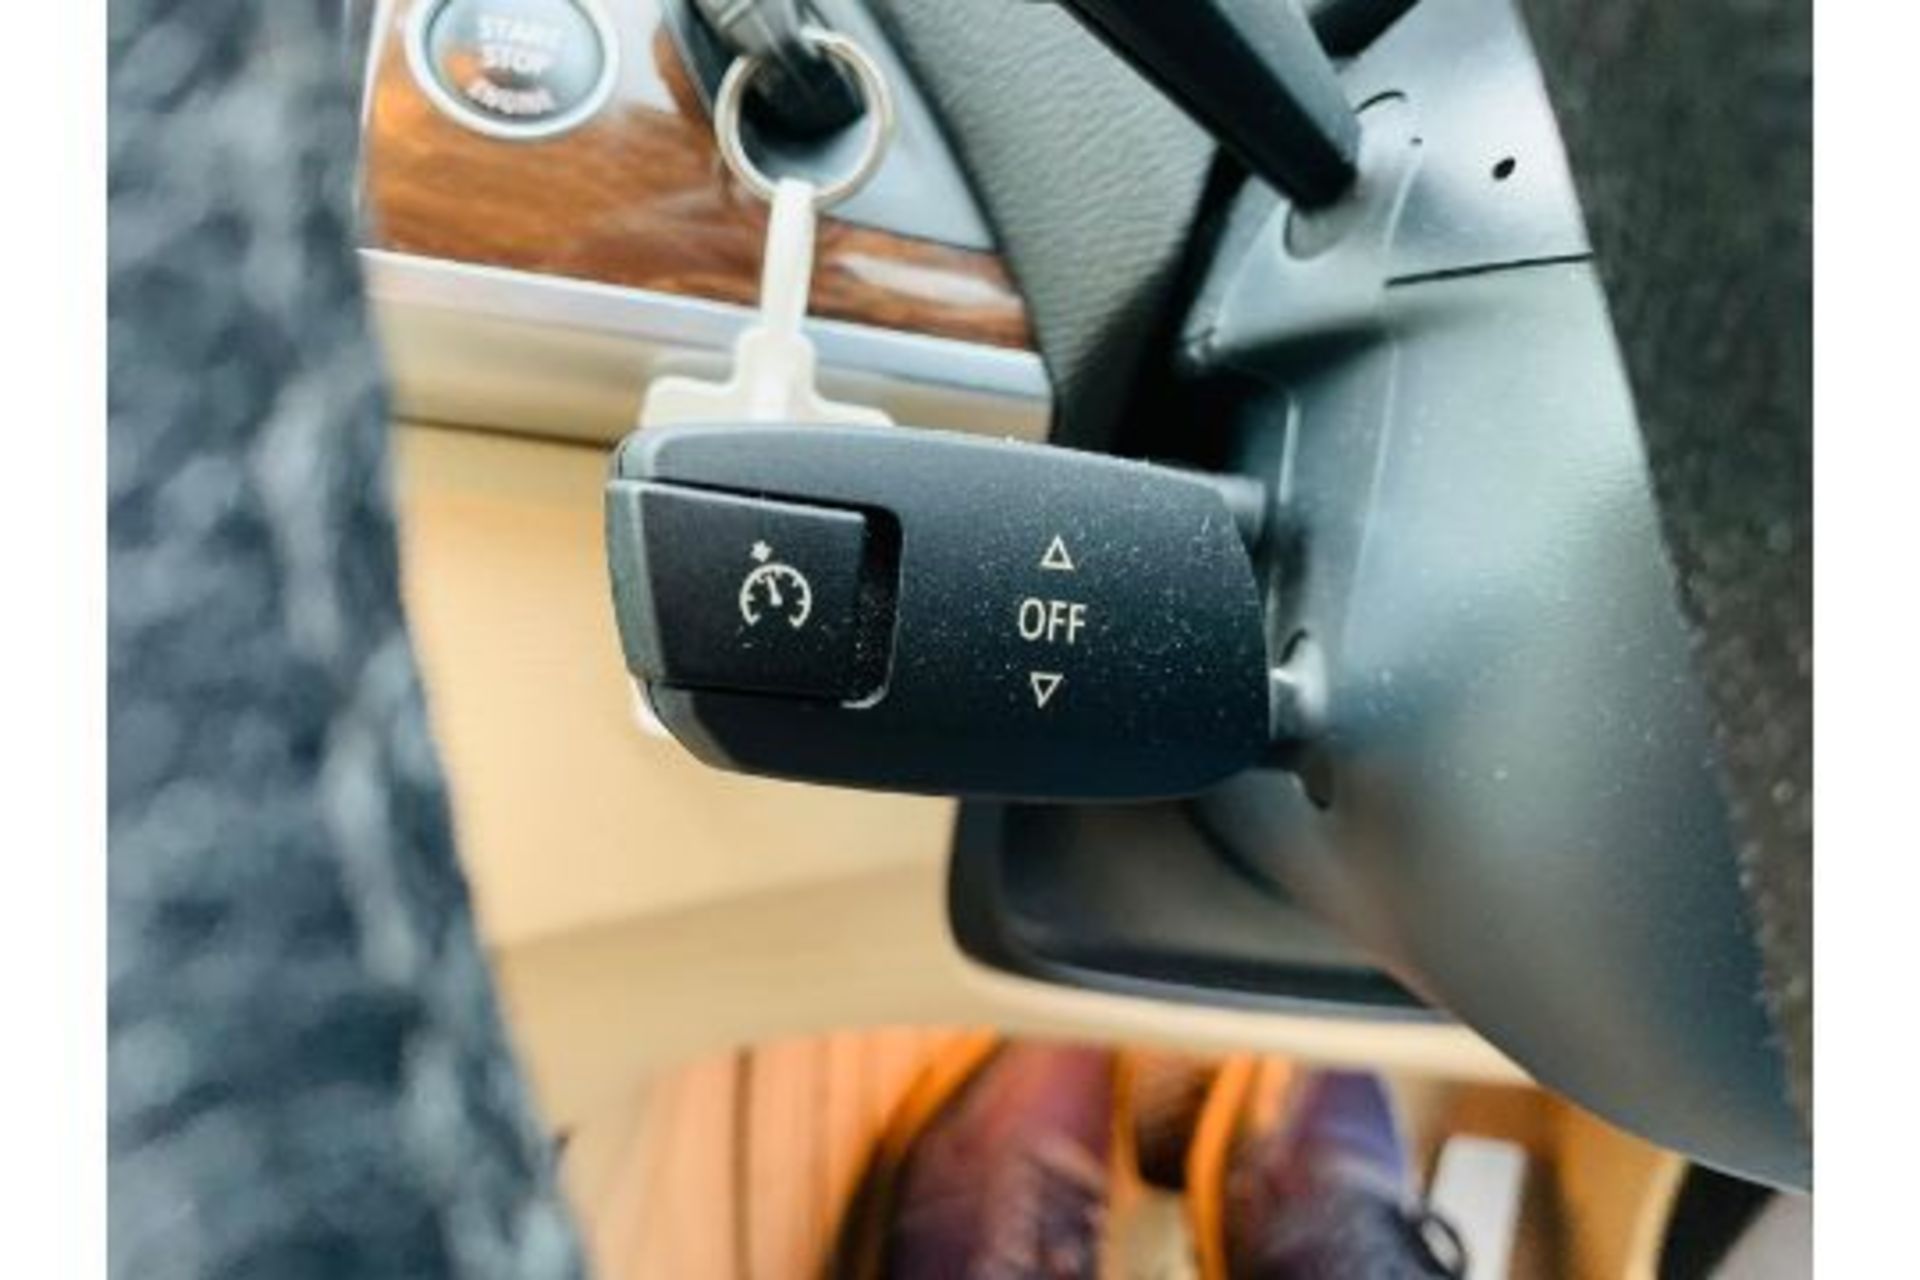 (RESERVE MET) BMW X6 xDrive 3.0d Auto - 2014 Reg - Leather Interior -Parking Sensors - Reversing Cam - Image 26 of 29